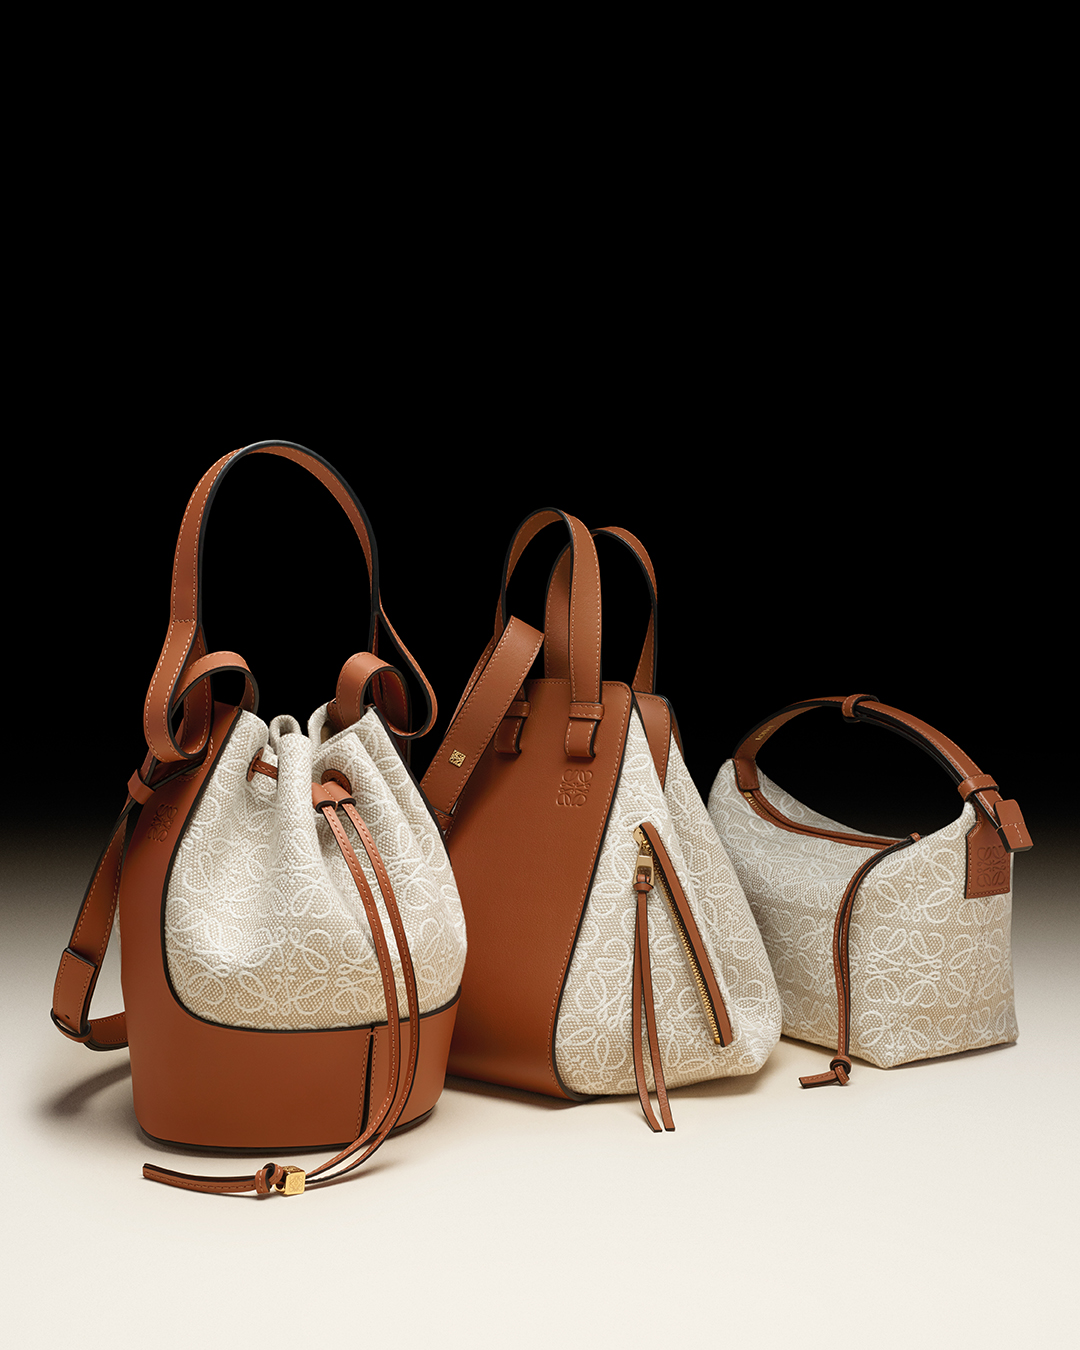 LOEWE new handbag collection 「Anagram jacquard」 | Them magazine